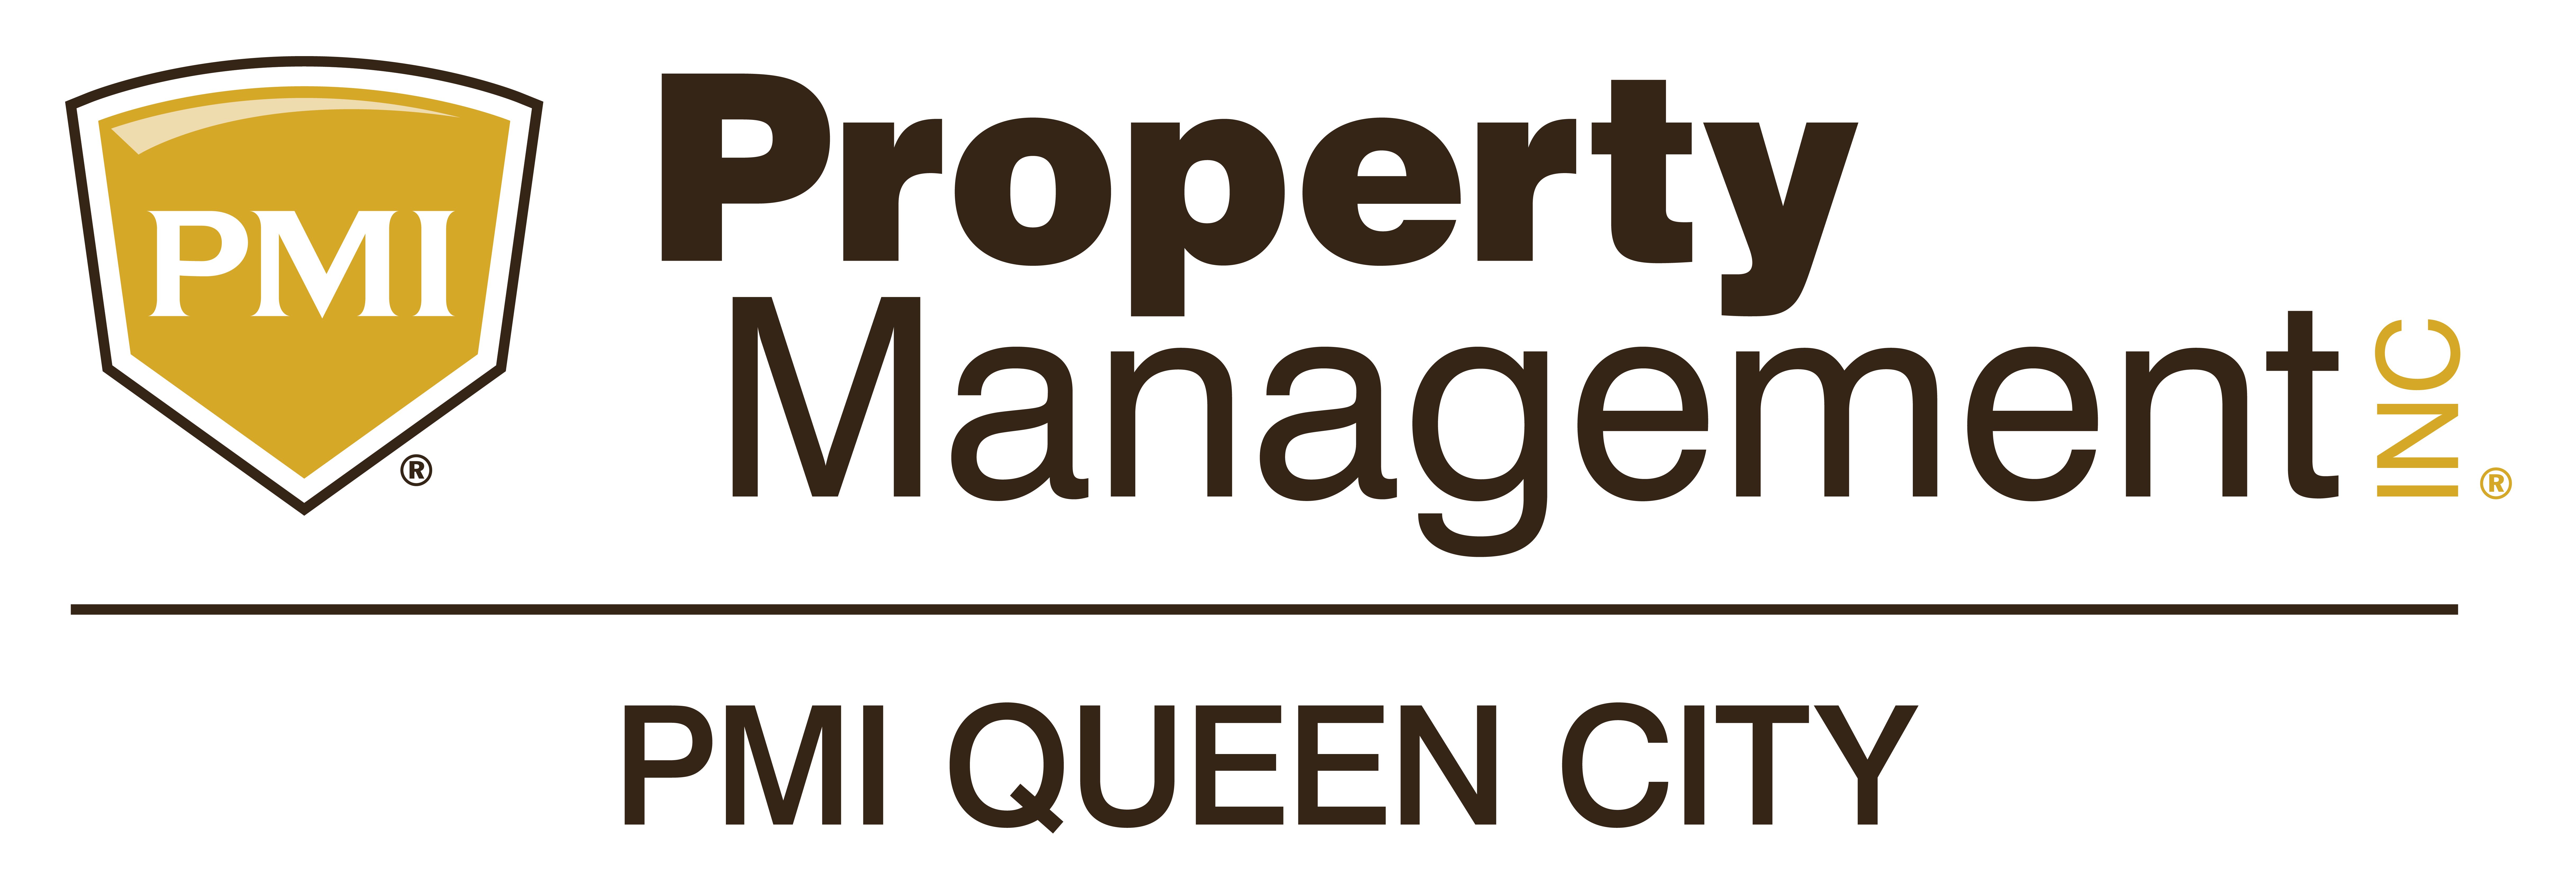 PMI Queen City logo